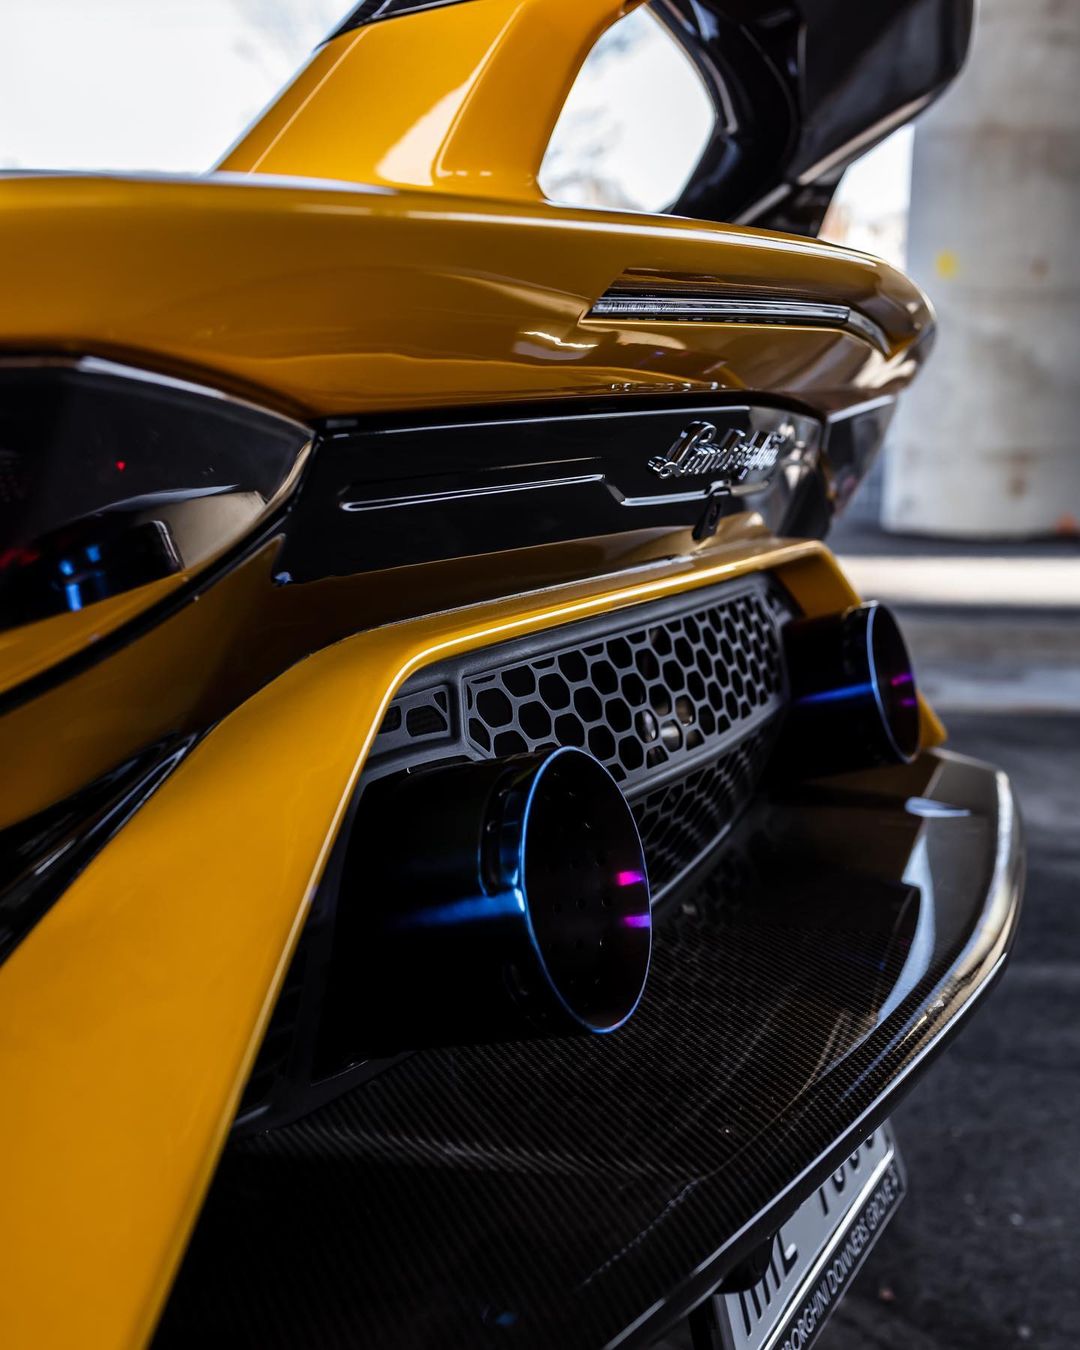 Details The Beauty, Speed Of Lamborghini Aventador SVJ: The Powerful ...